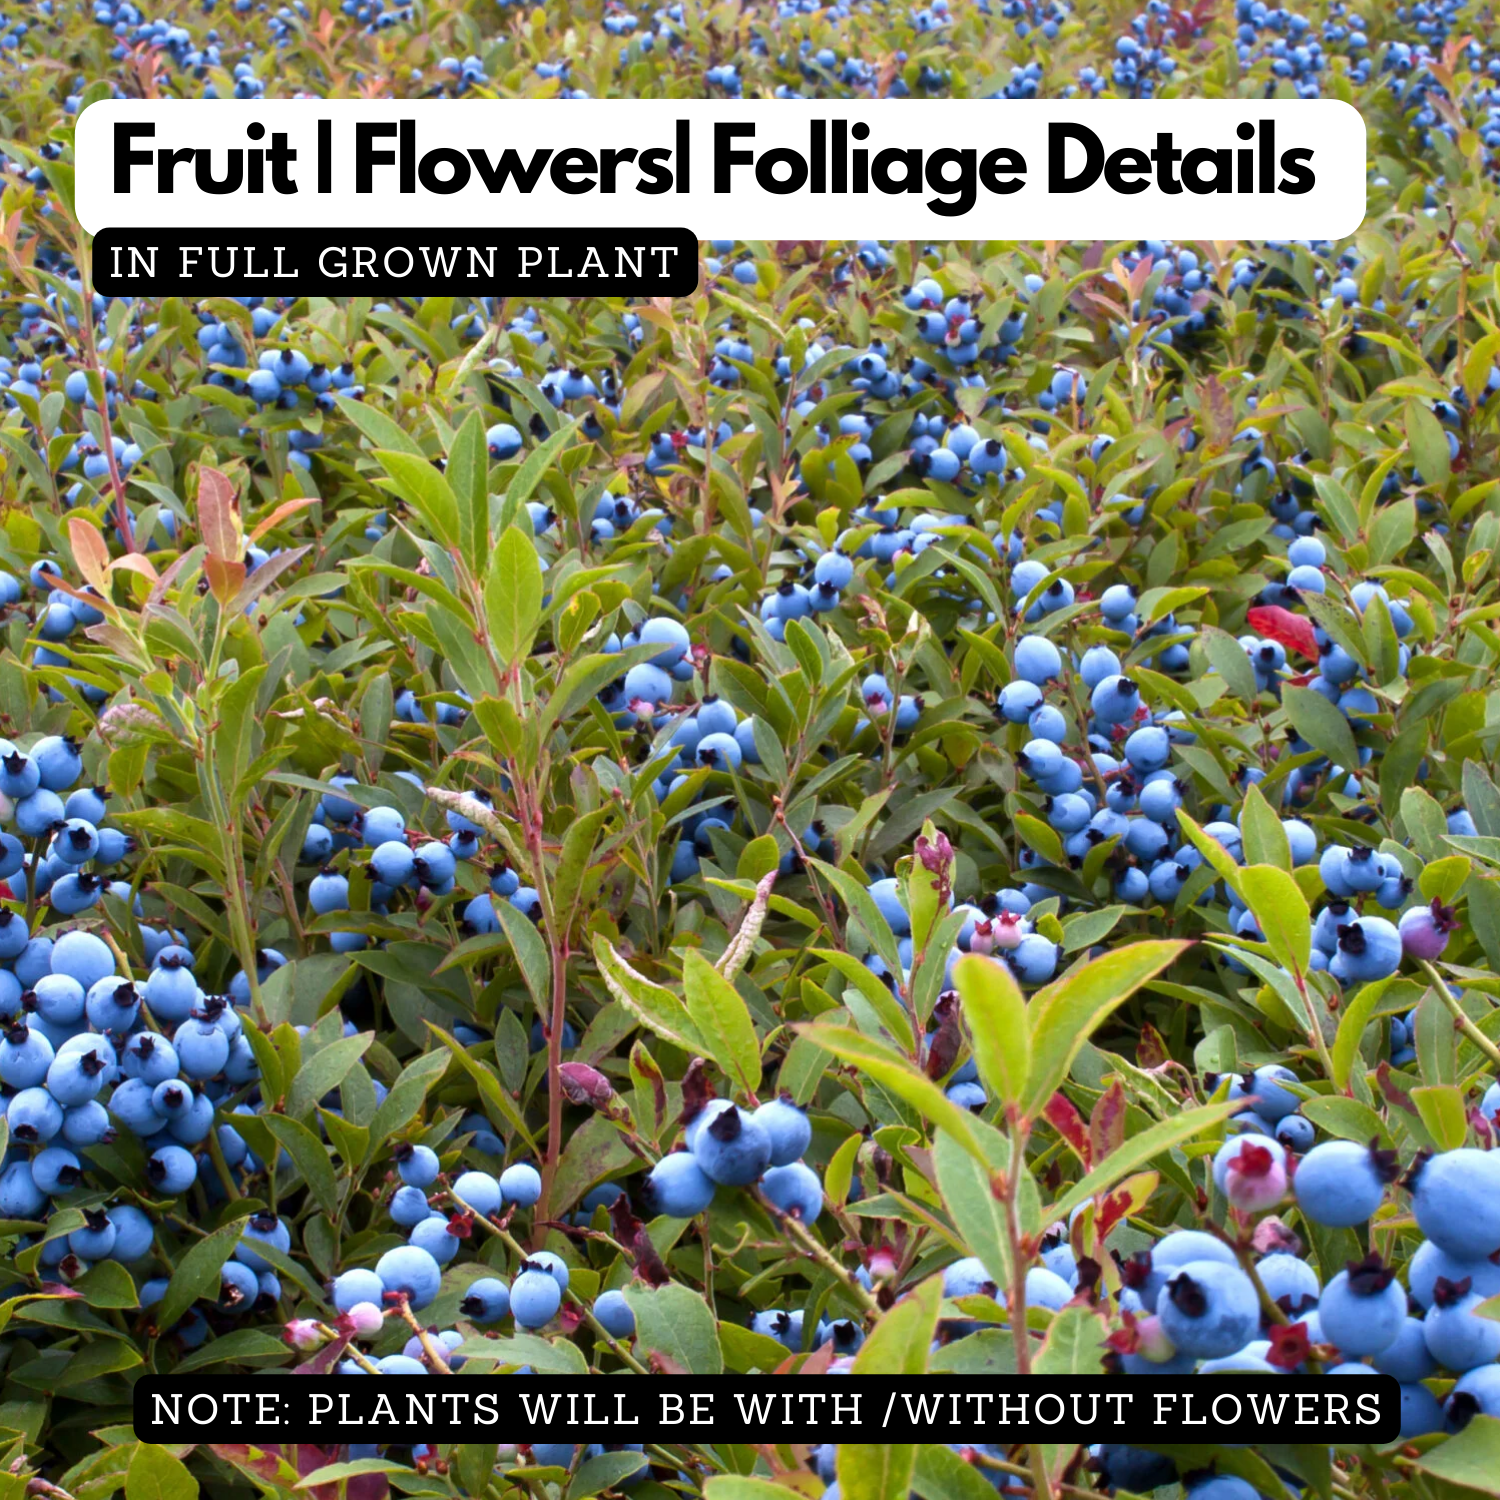 Wild Blueberry (Vaccinium sect. Cyanococcus) Fruit Live Plant (Home & Garden)